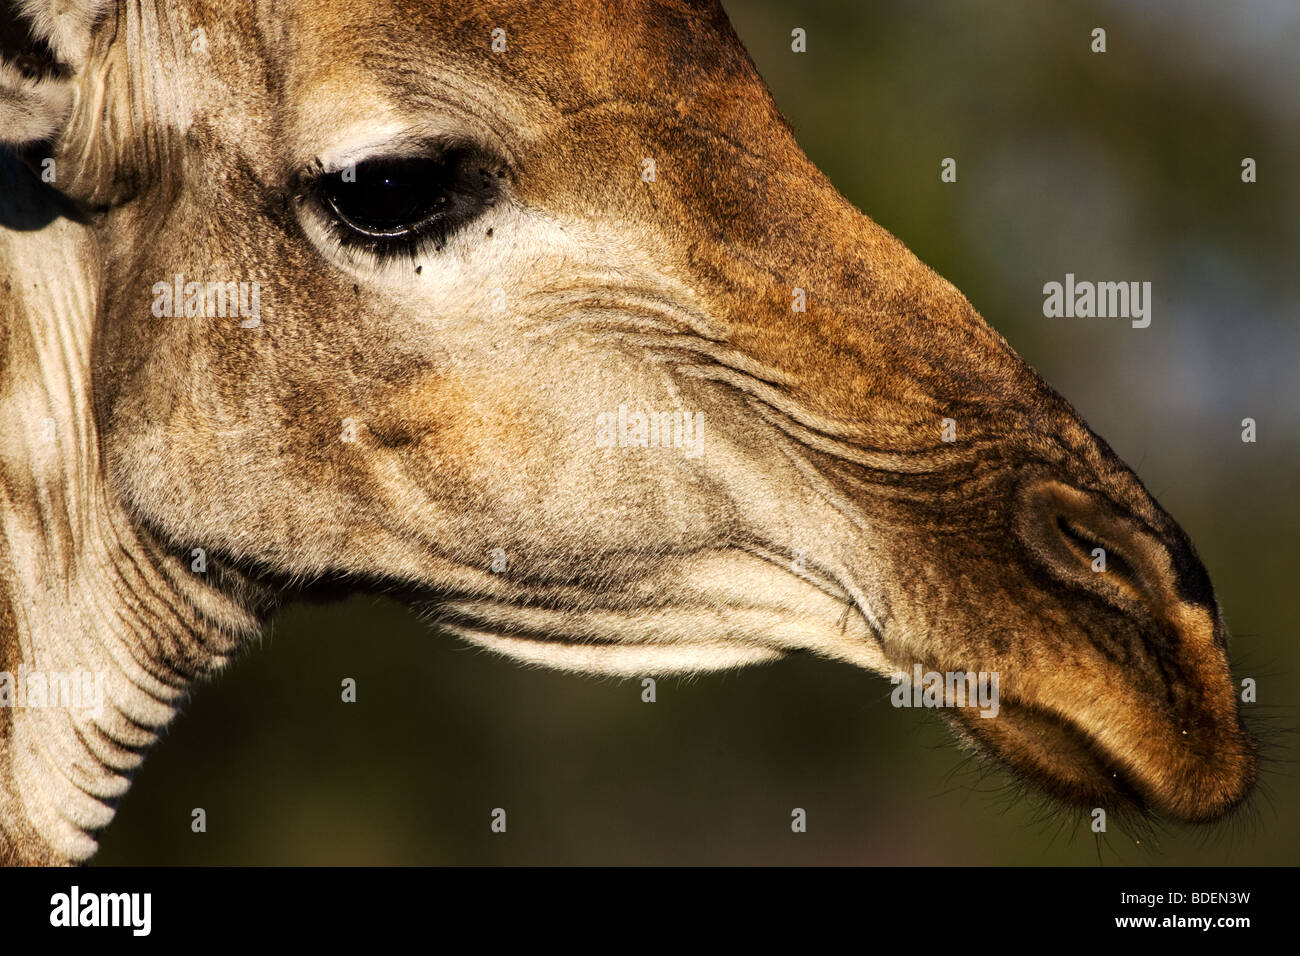 Giraffe close-up, Kruger Park, South Africa. Stock Photo